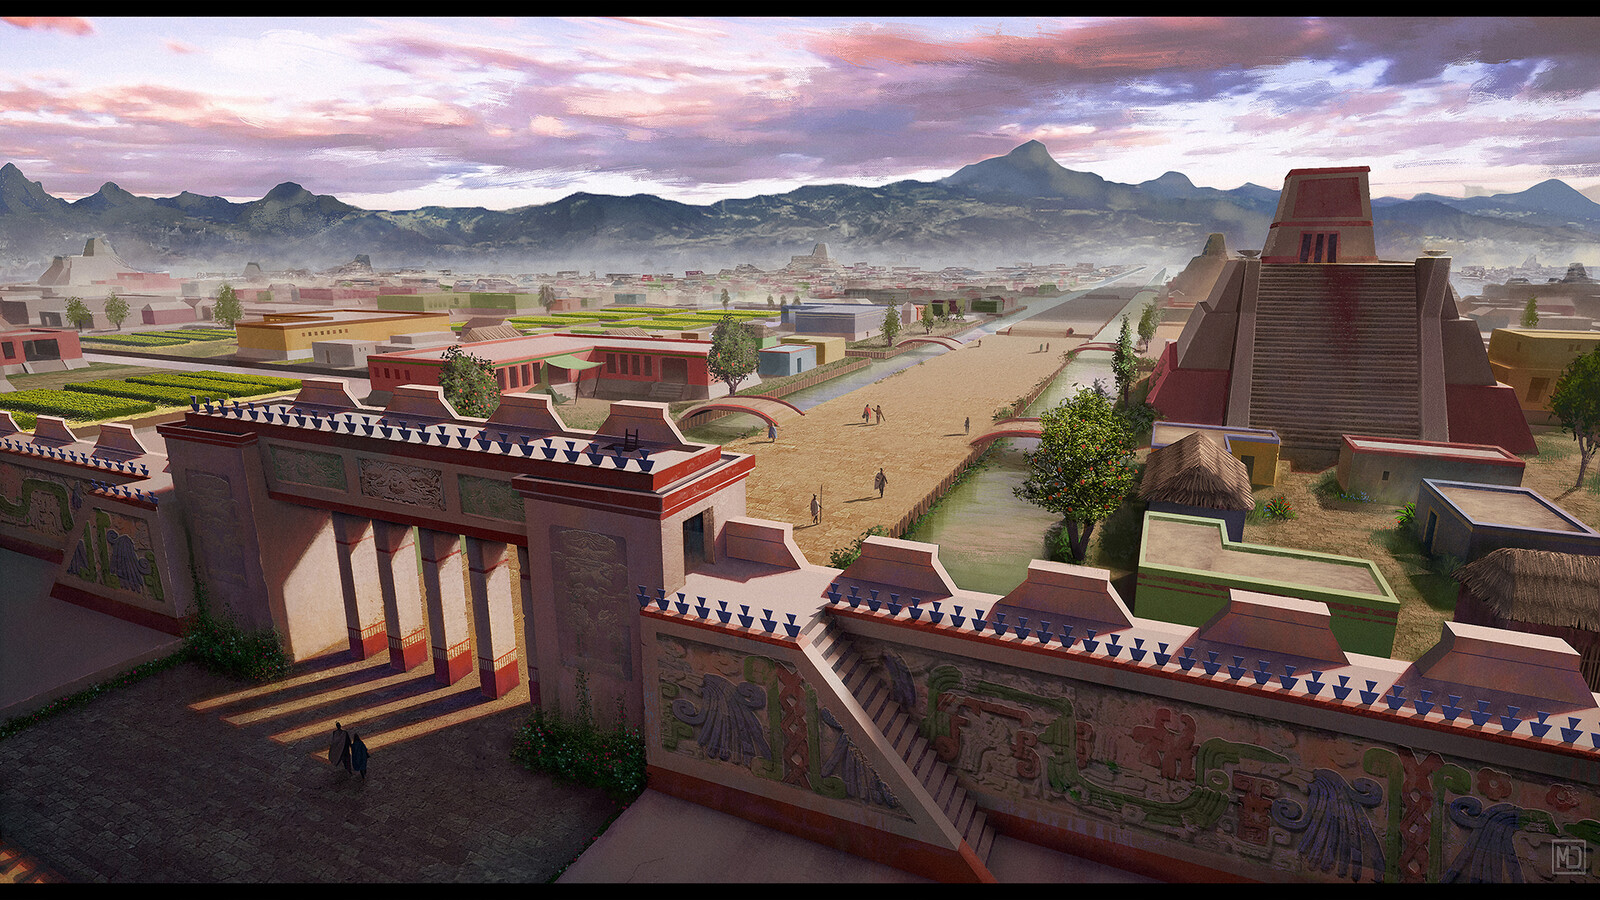 Tenochtitlan - Sacred Precinct's West Gate